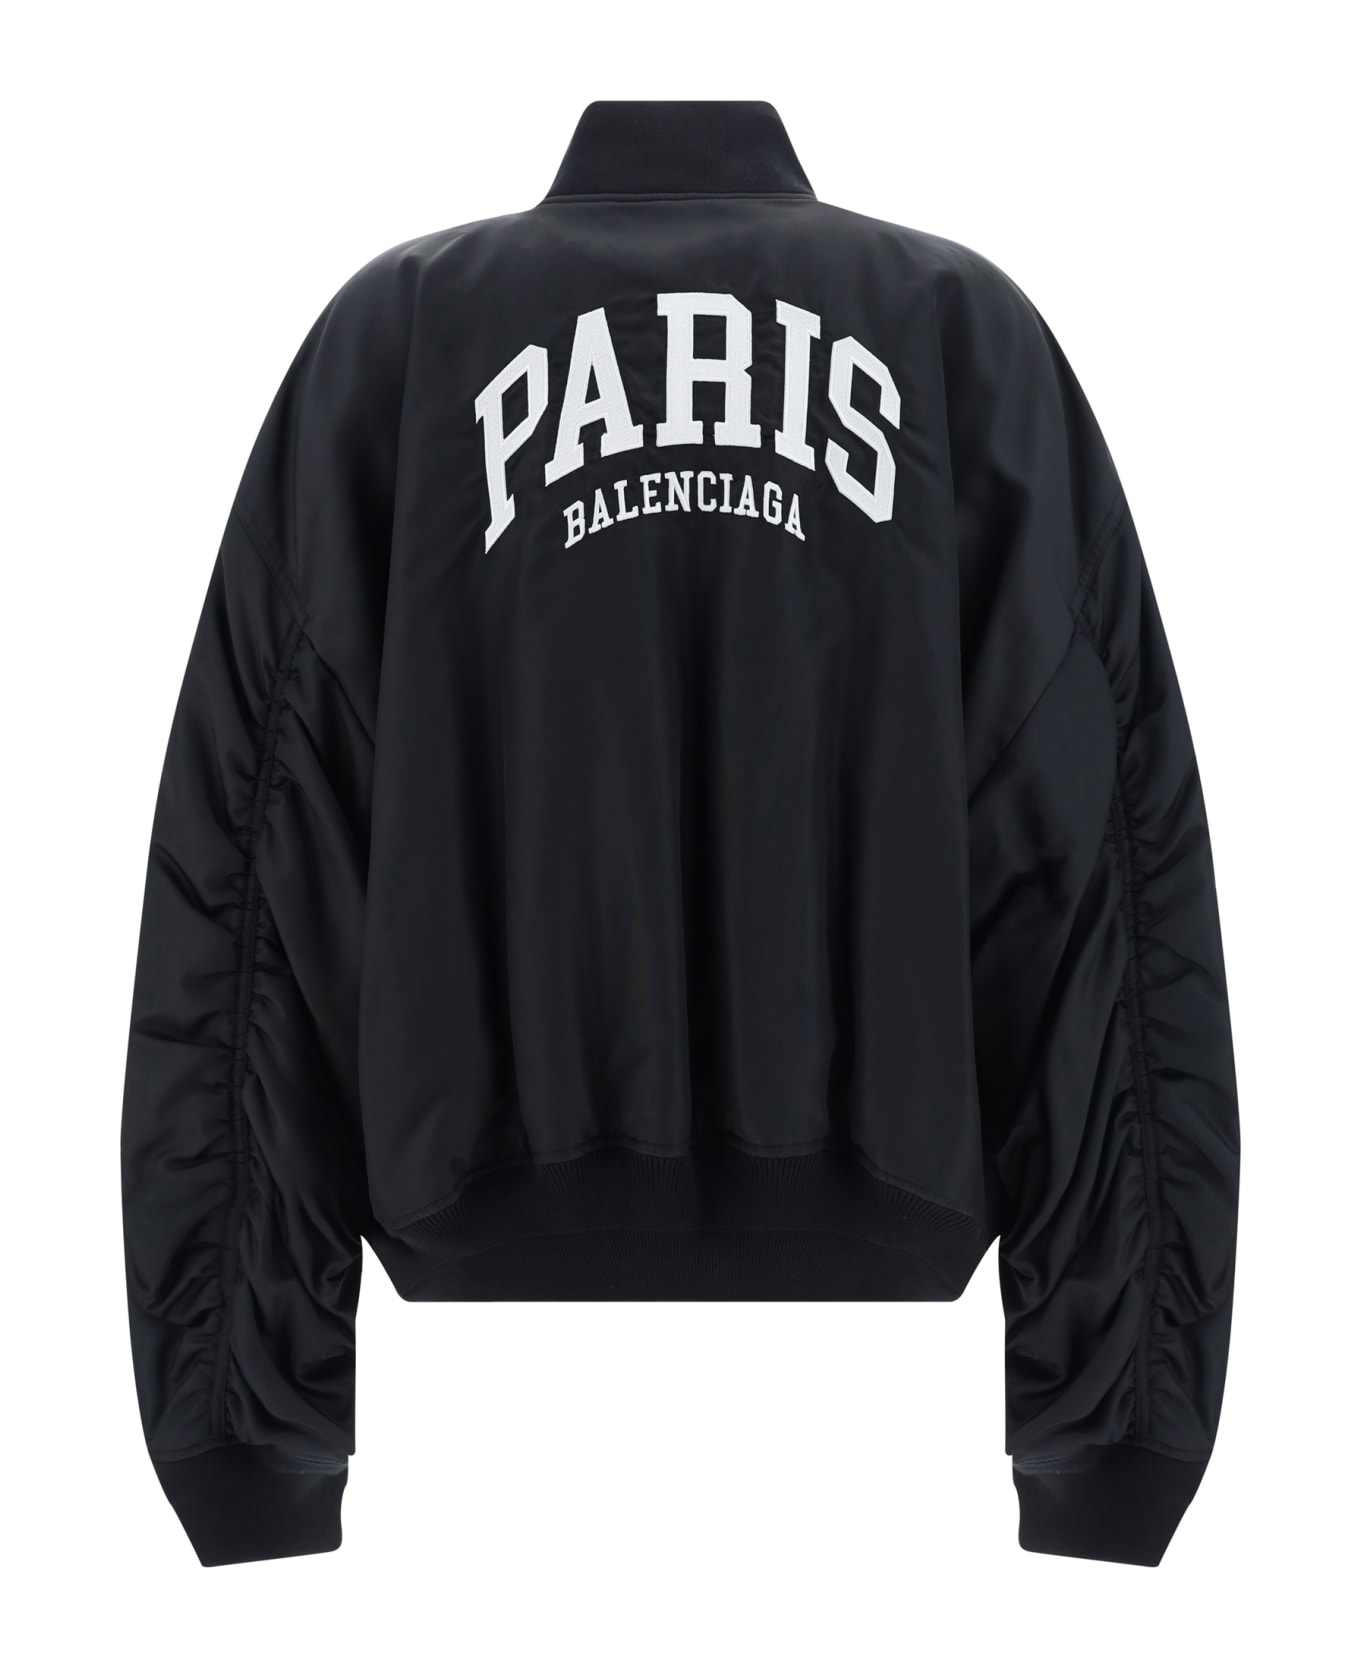 Balenciaga Paris Varsity Jacket - Black